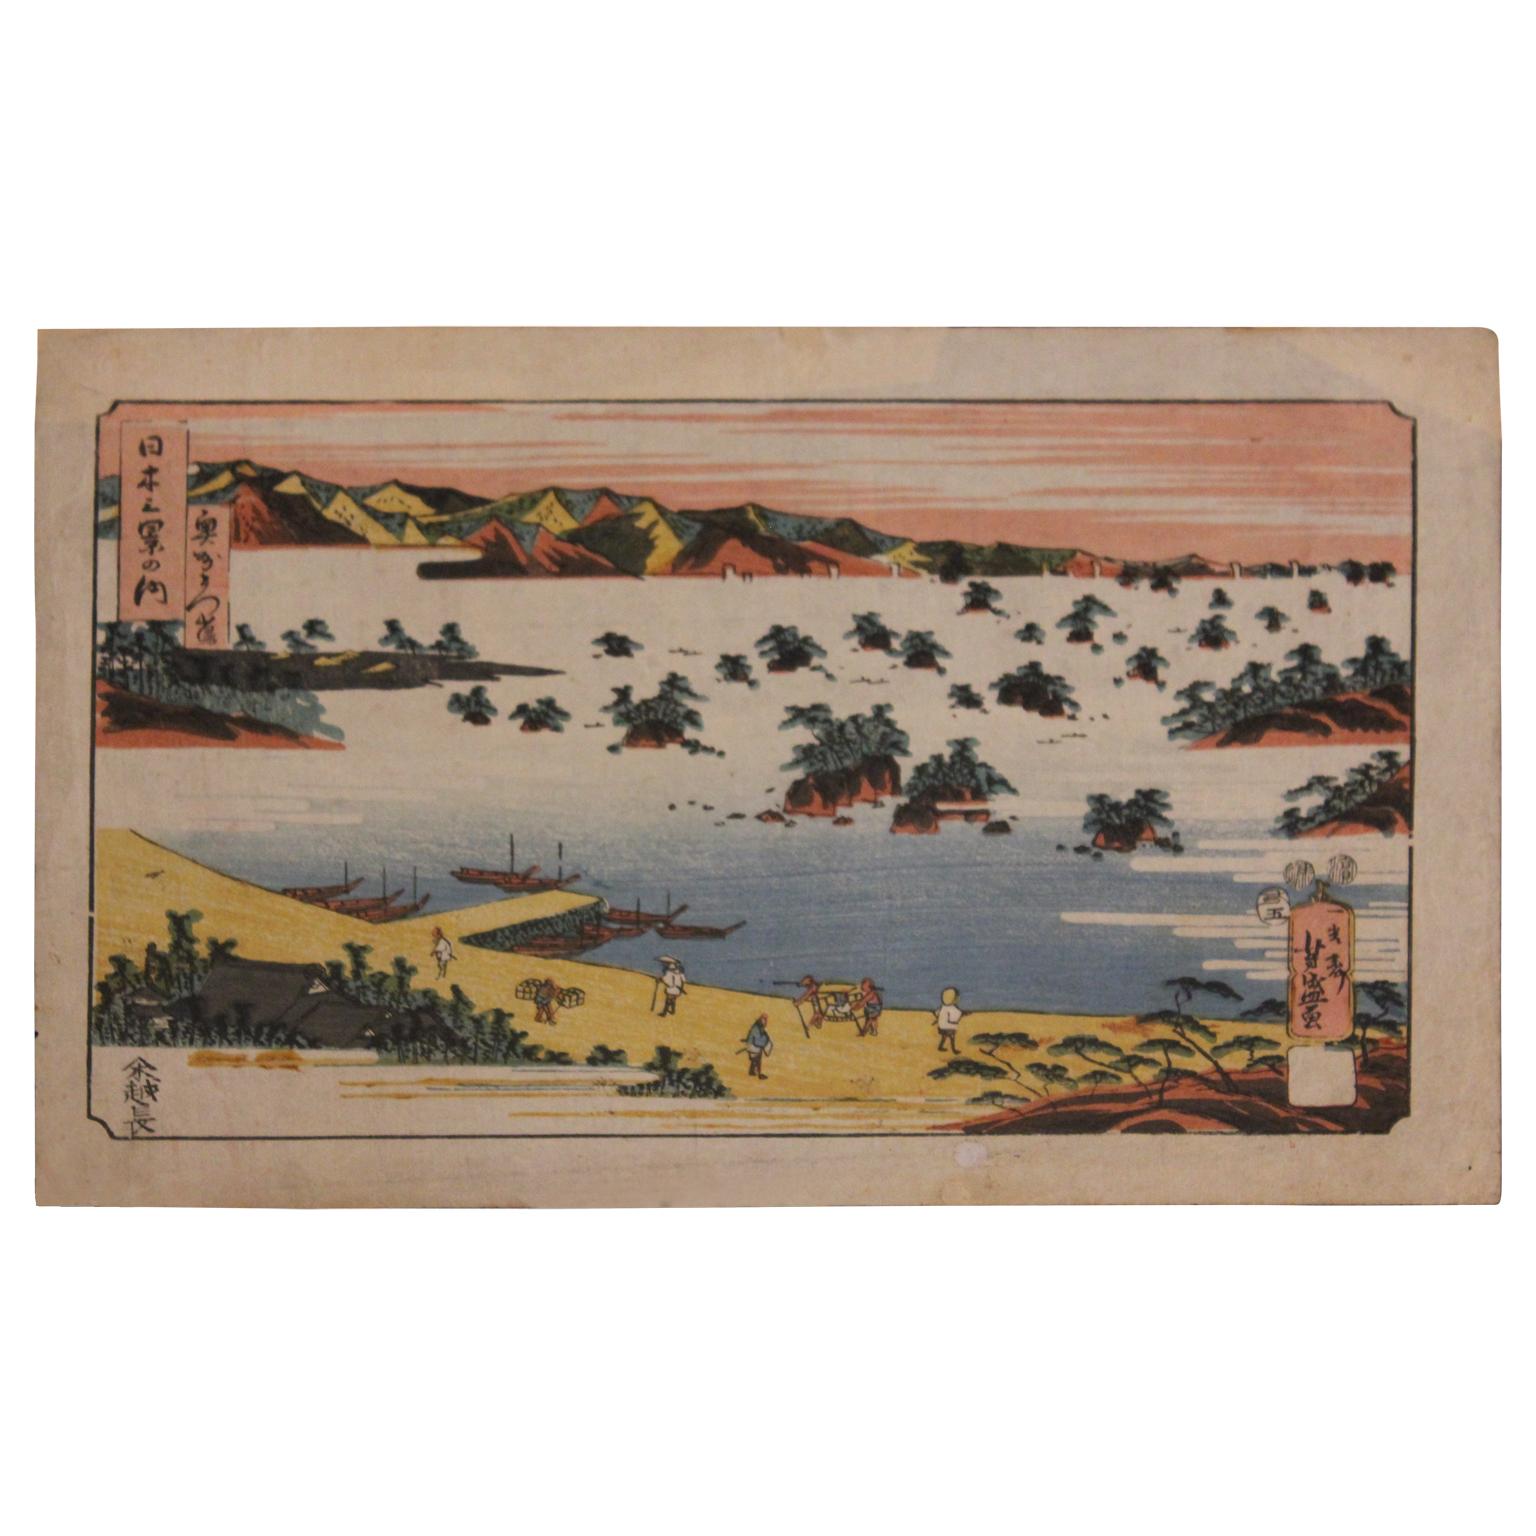 Japanese Woodblock Print “Two Men.” Vintage 1930s-1950s.